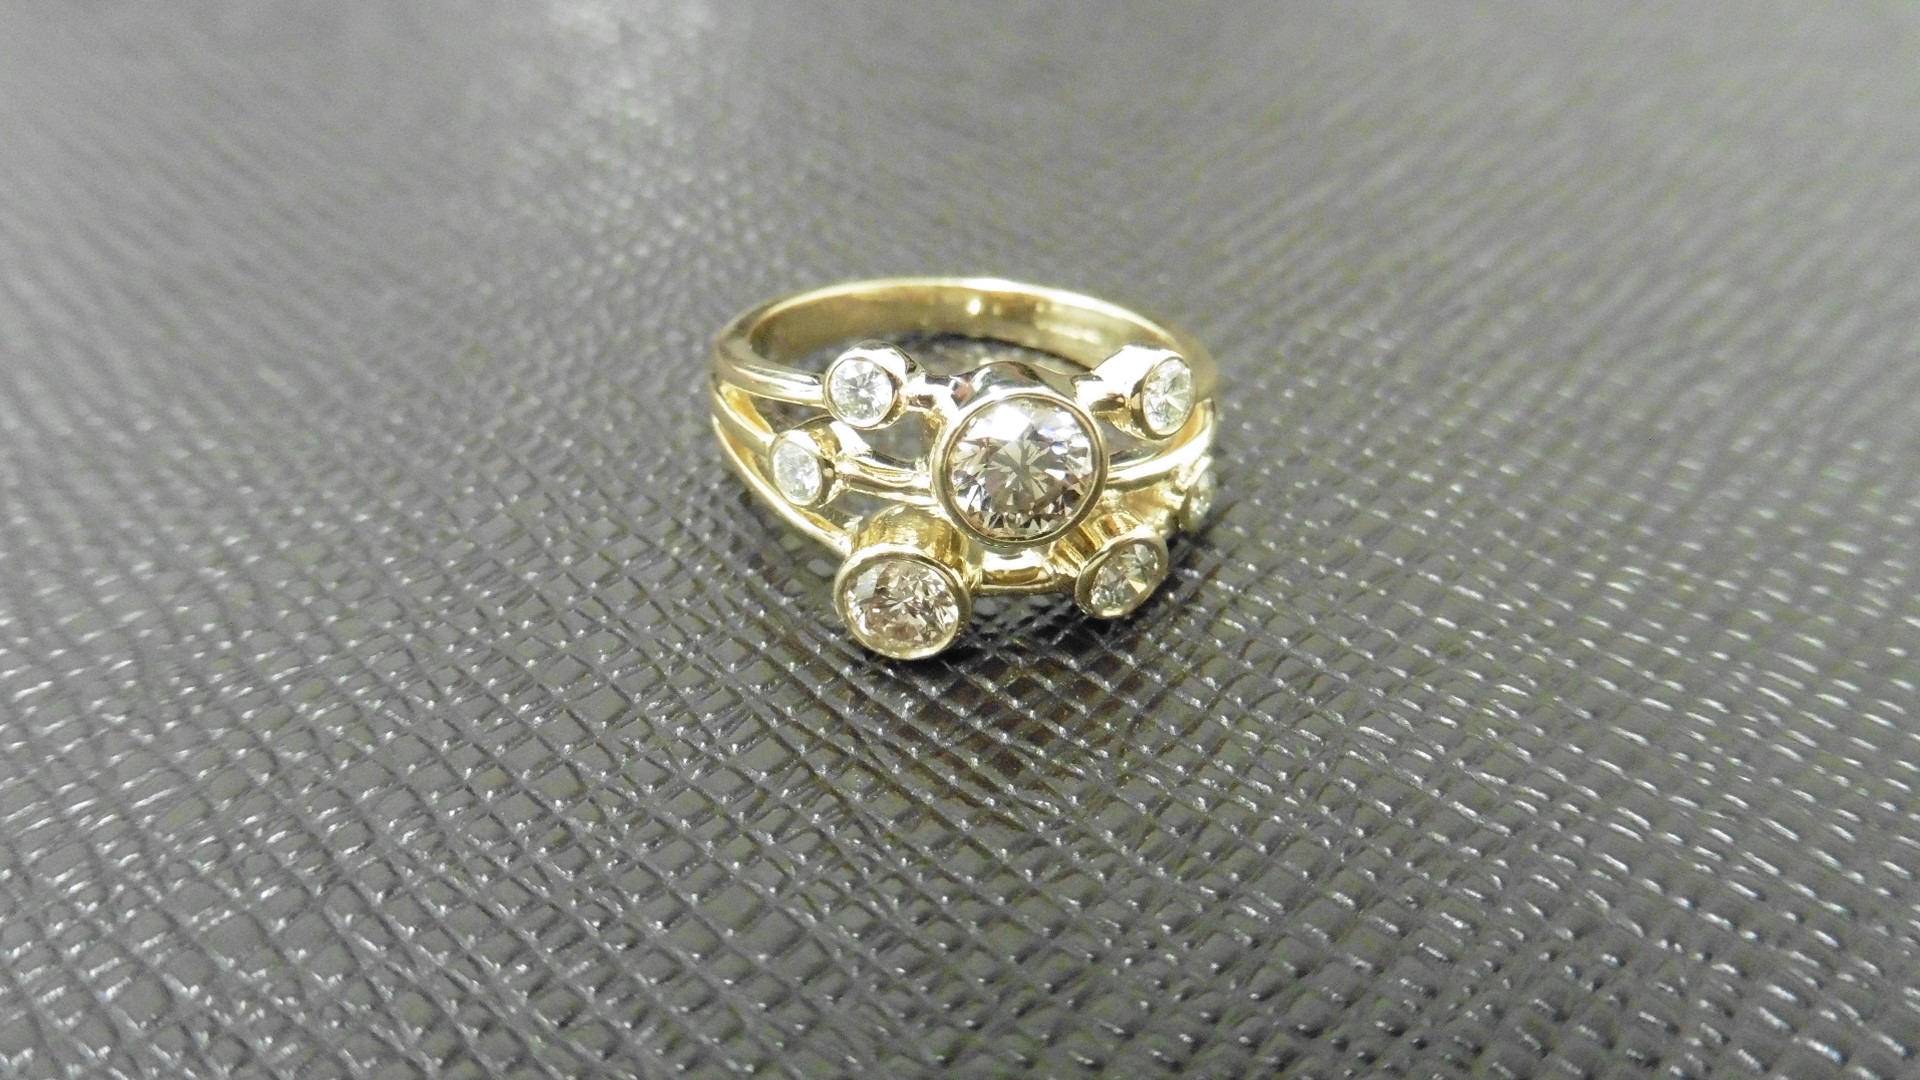 1.00ct 9ct yellow gold diamond dress ring, rain dance style. Set with 7 graduated brilliant cut - Image 2 of 4